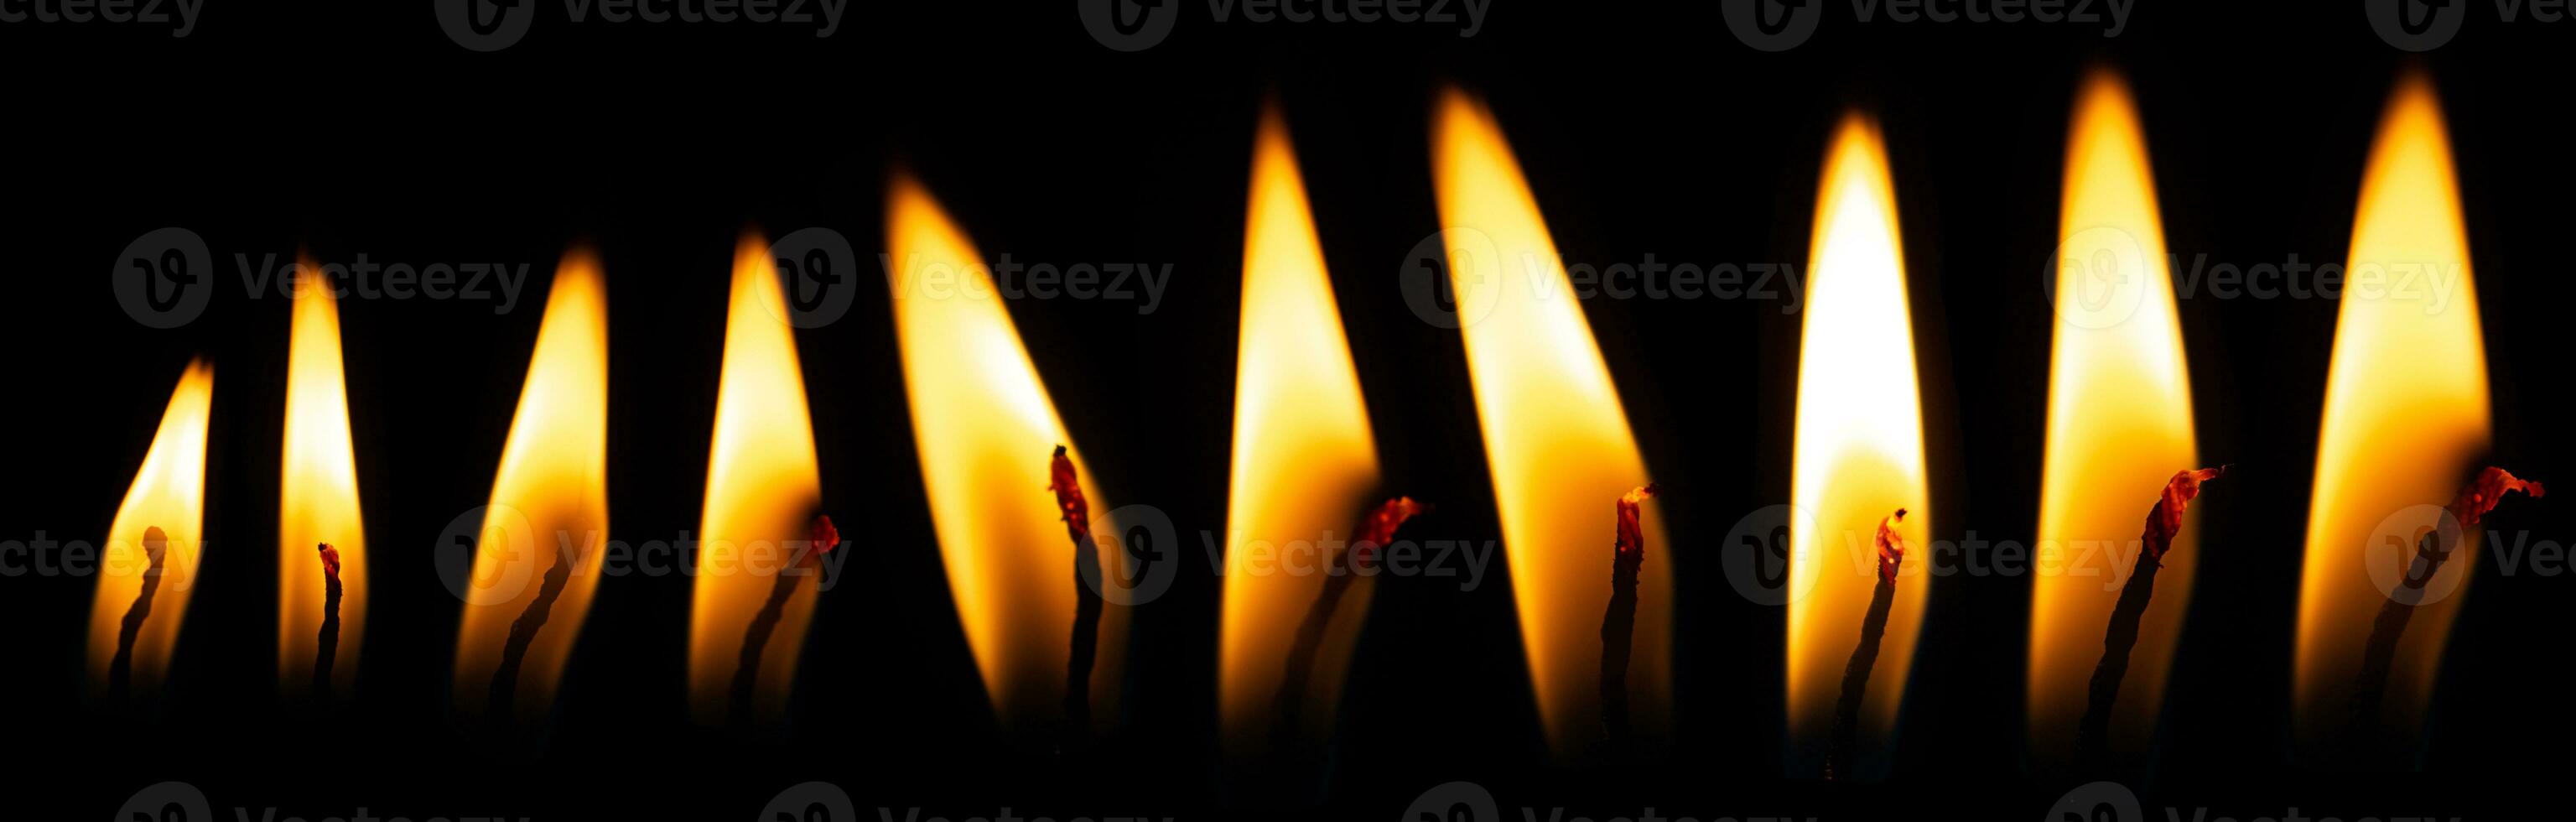 Candle flame on black isolated background. Light burning yellow-orange fire. Set collection photo